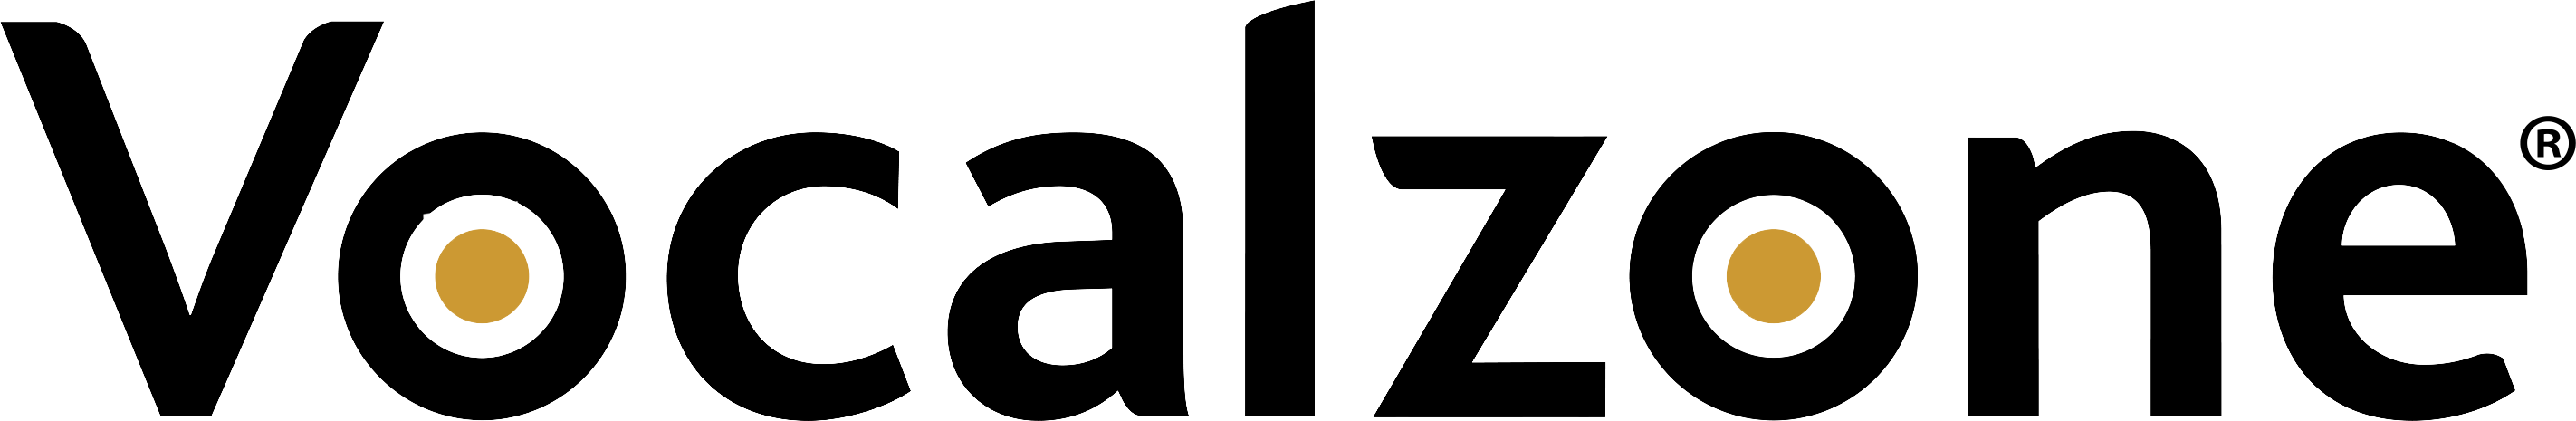 Vocal Zone Logo